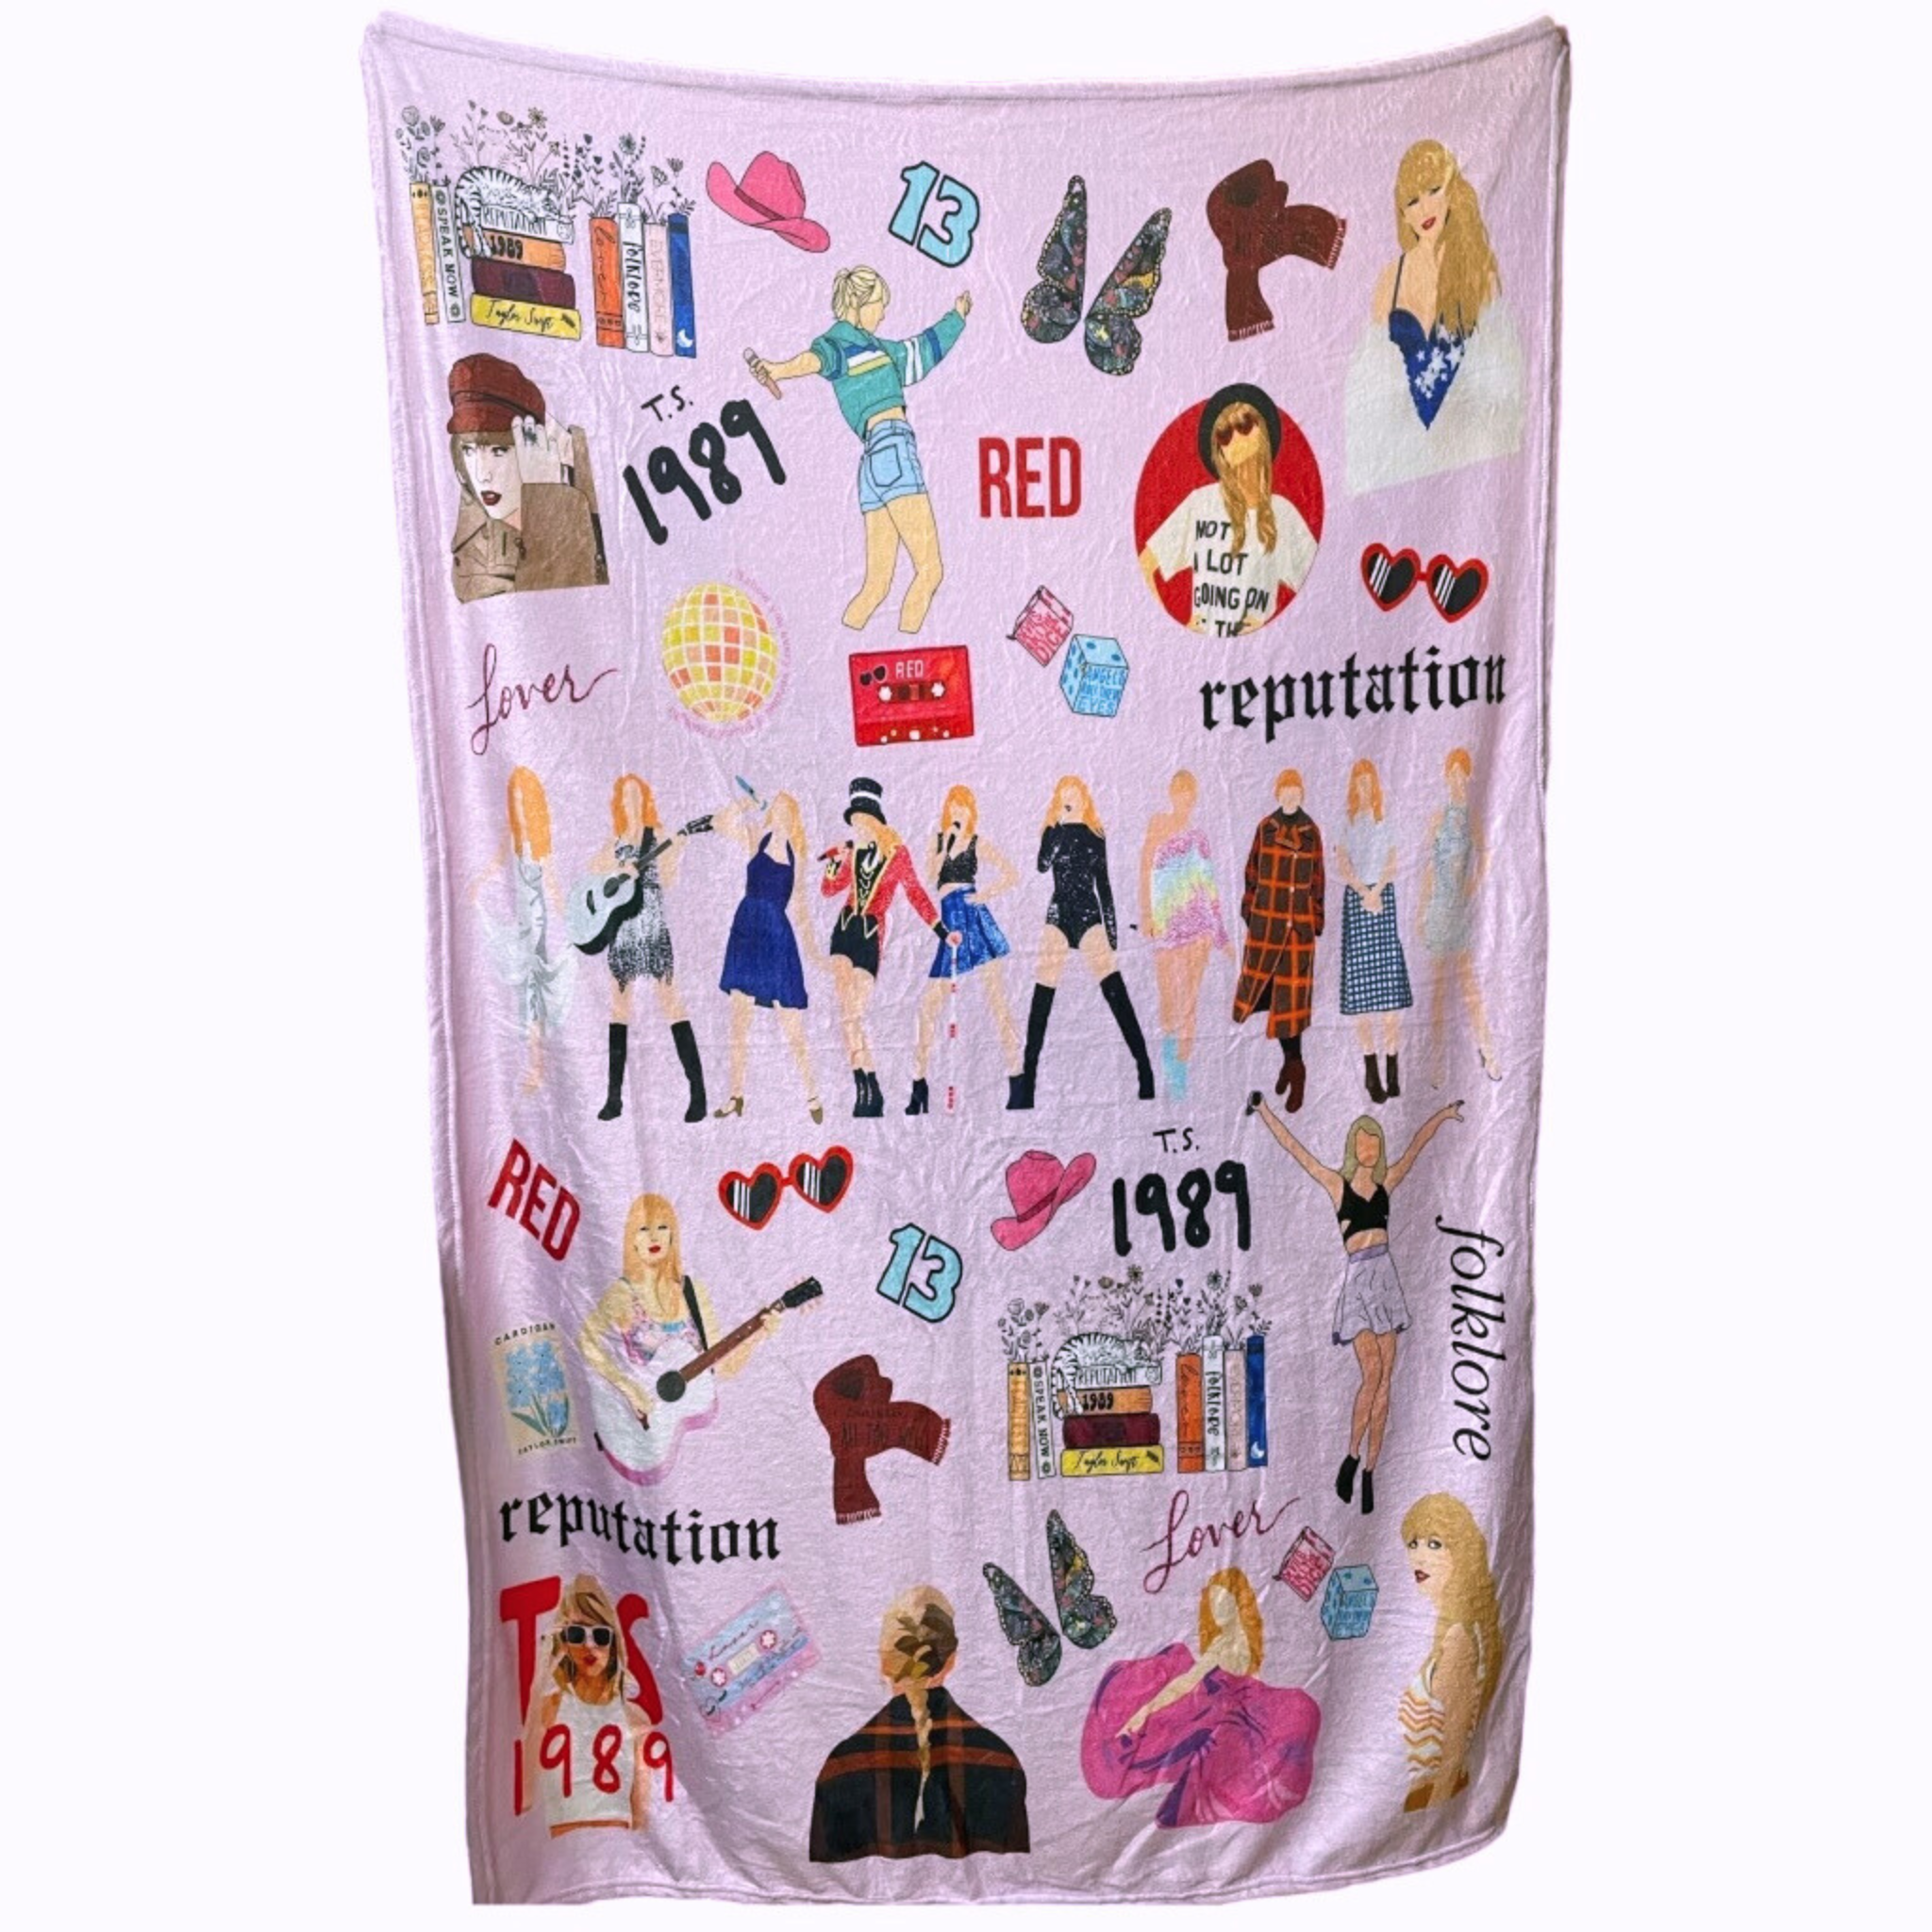 Taylor Swift Reputation Plush Blanket